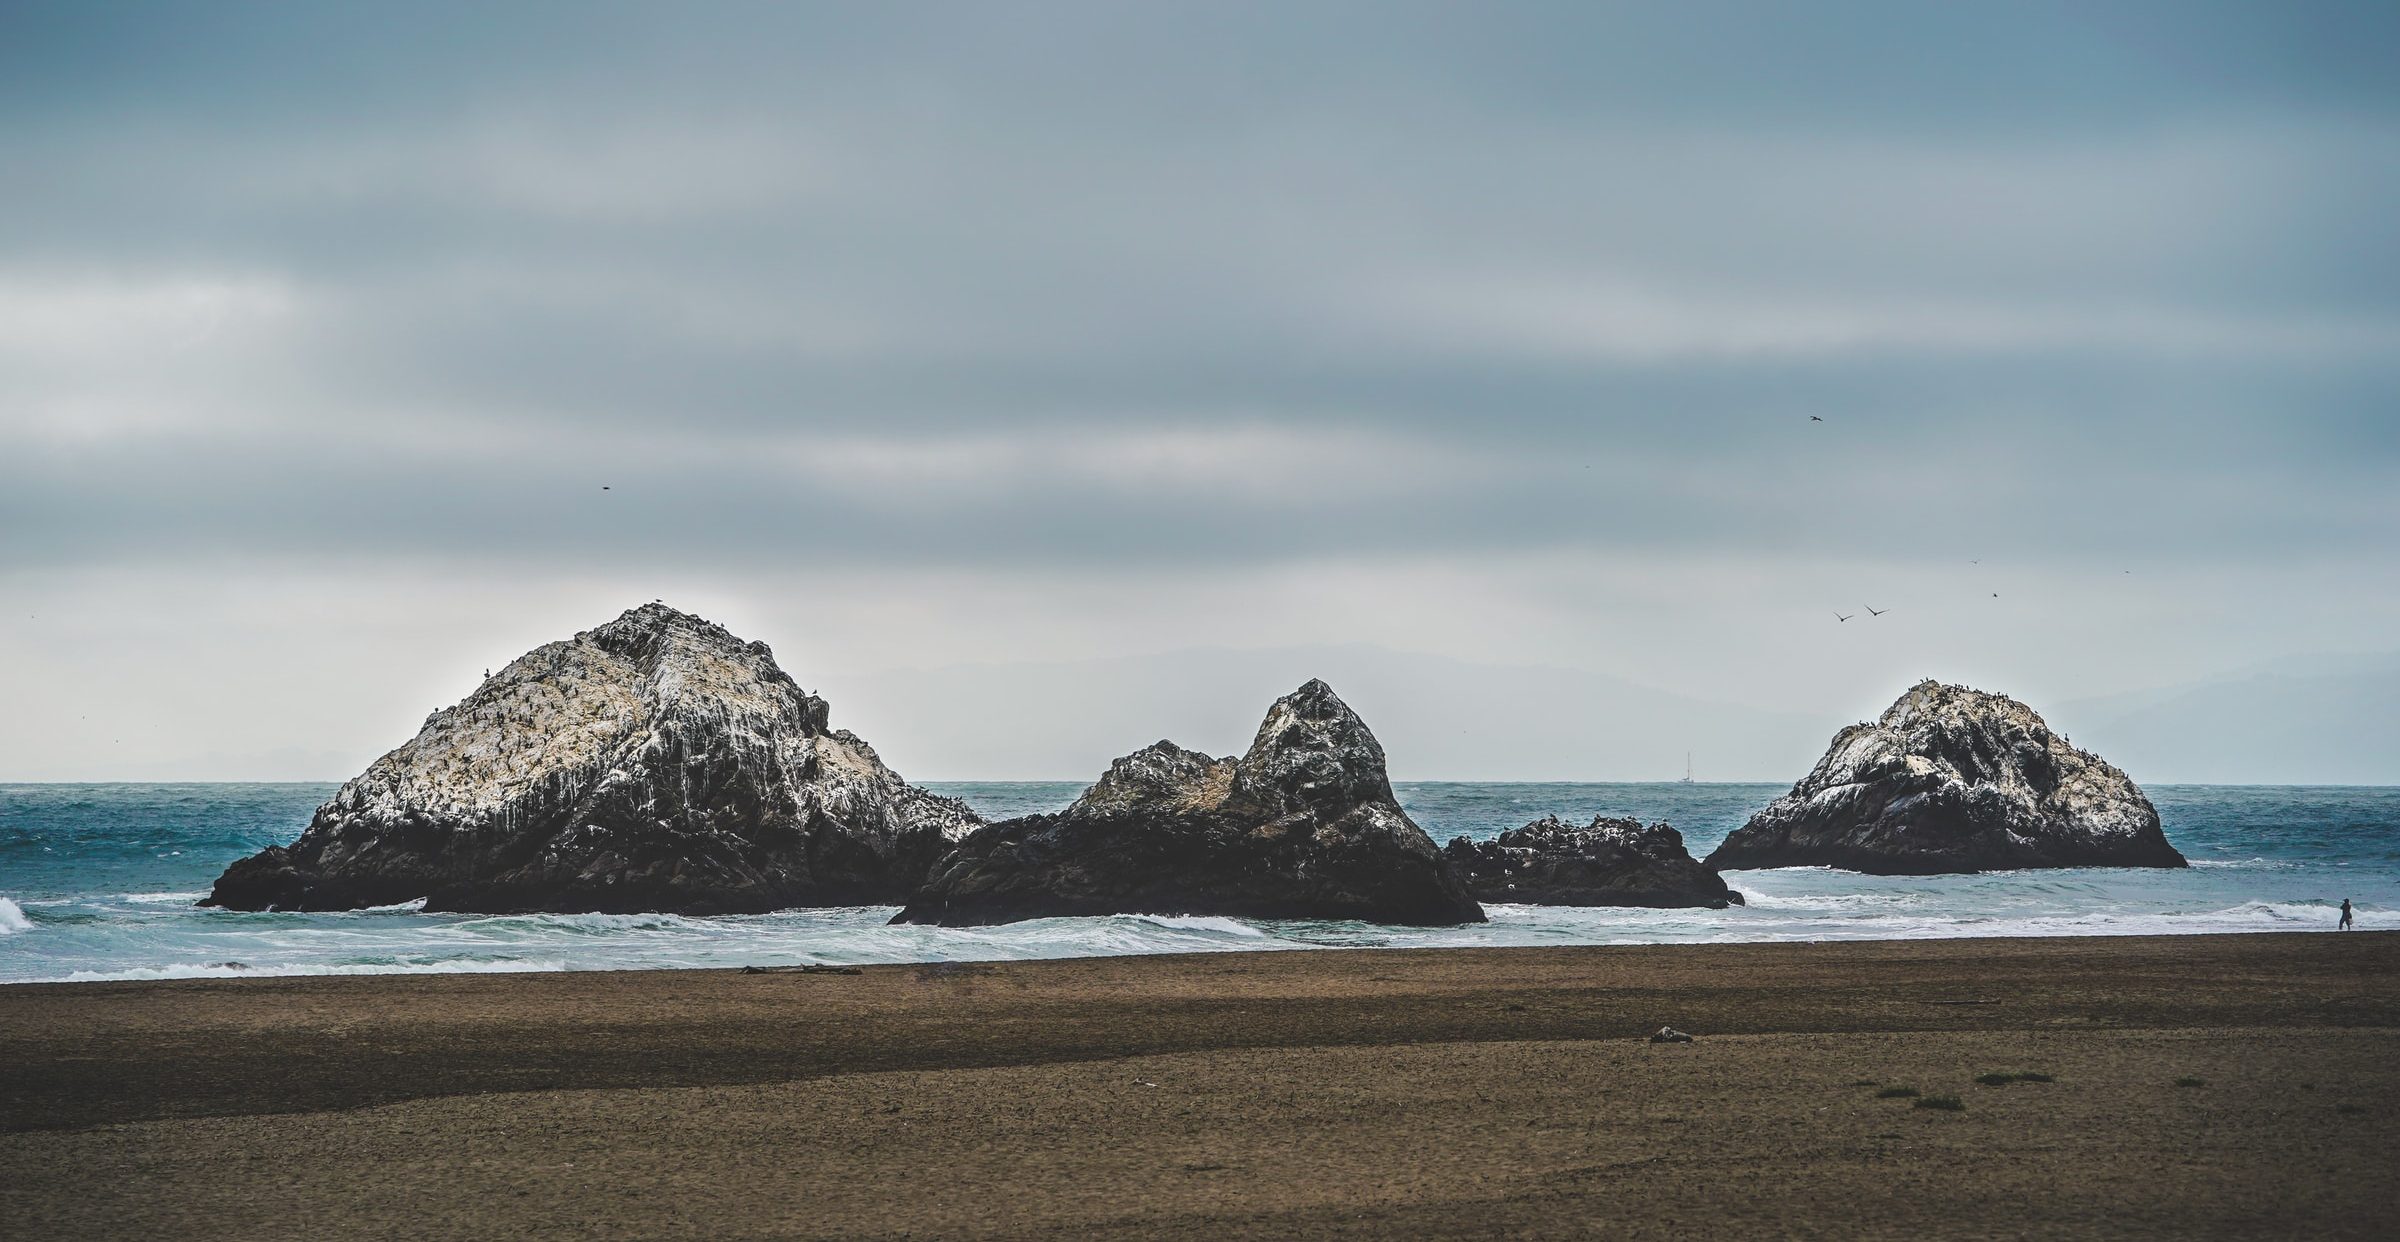 View of the rocks off Ocean Beach in San Francisco